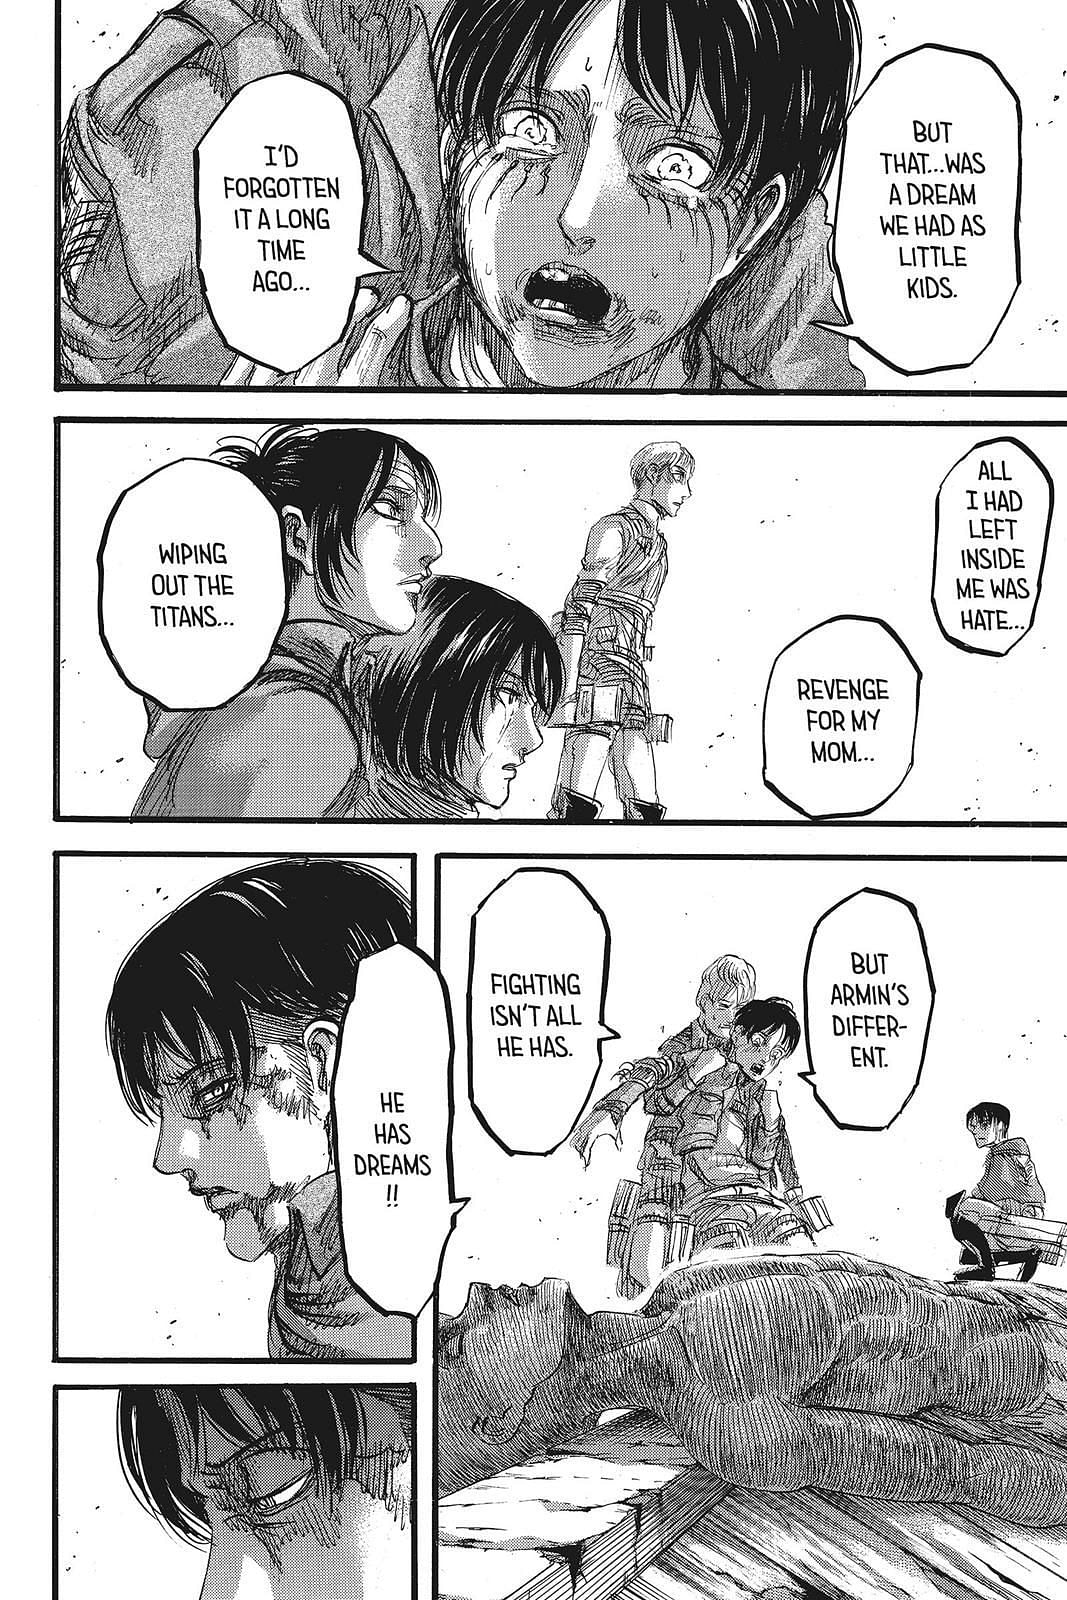 Eren on turning Armin to the colossal titan (Image via Attack on Titan)